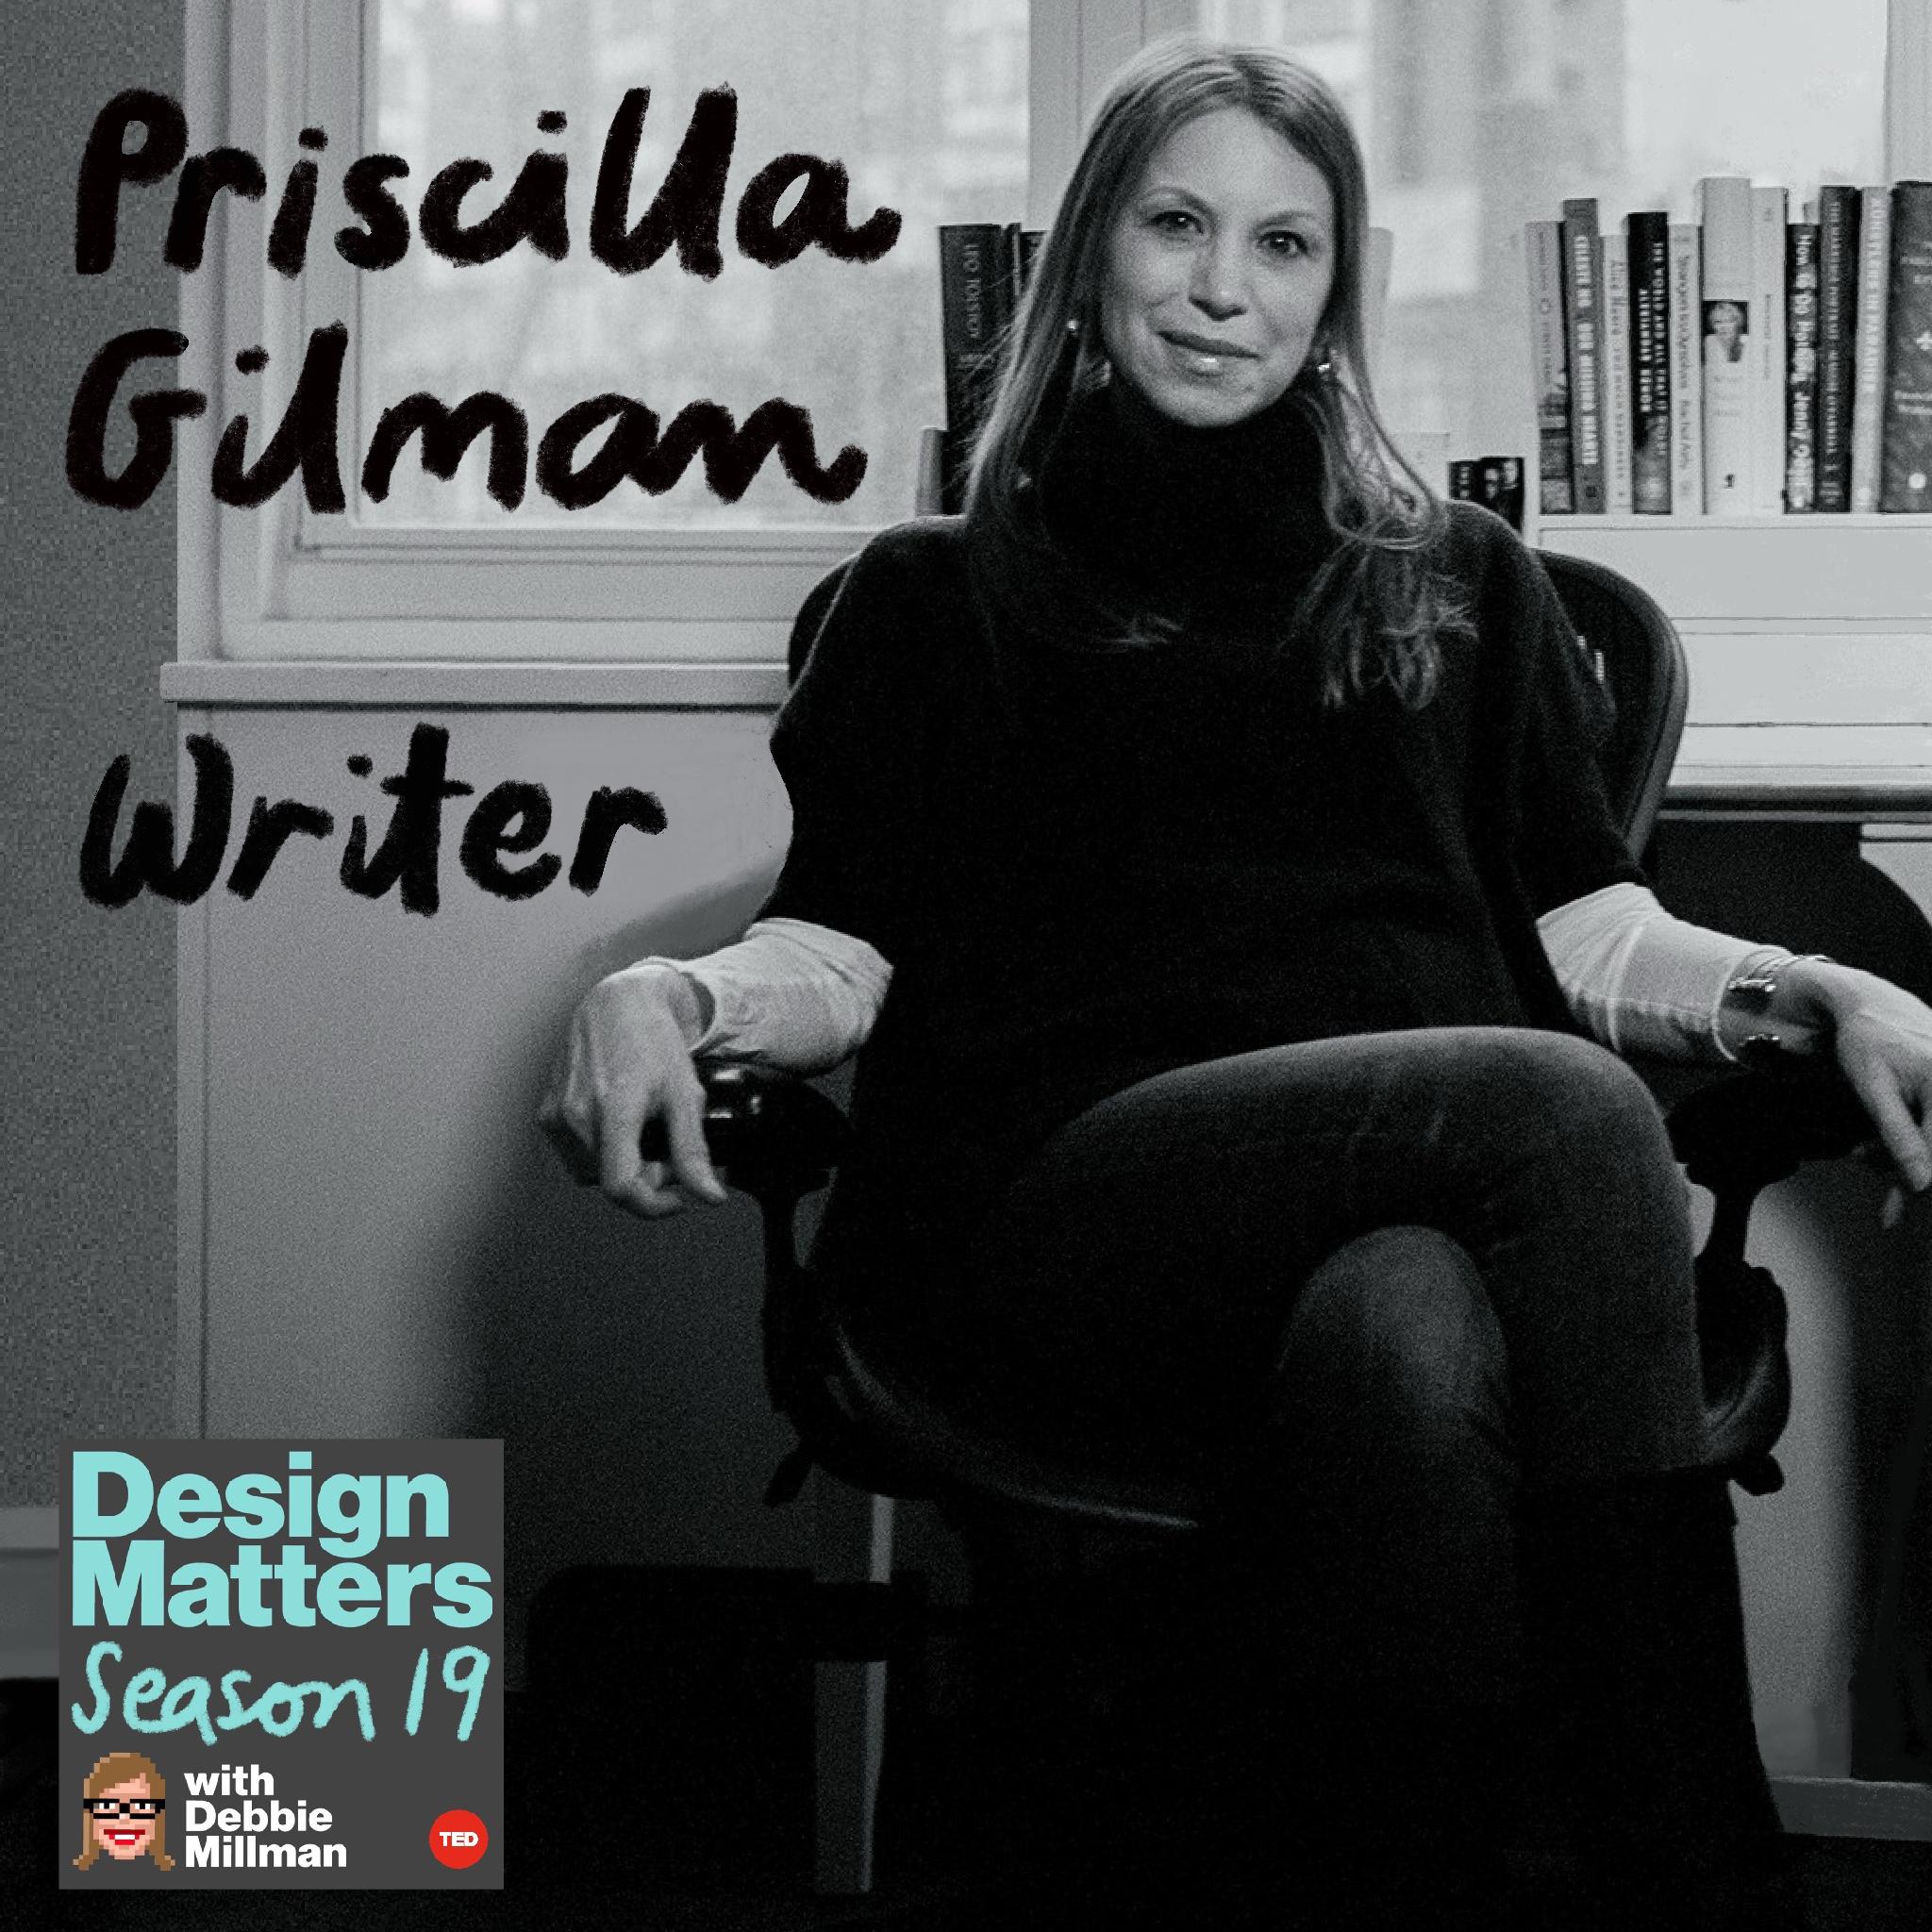 Thumbnail for "Priscilla Gilman".